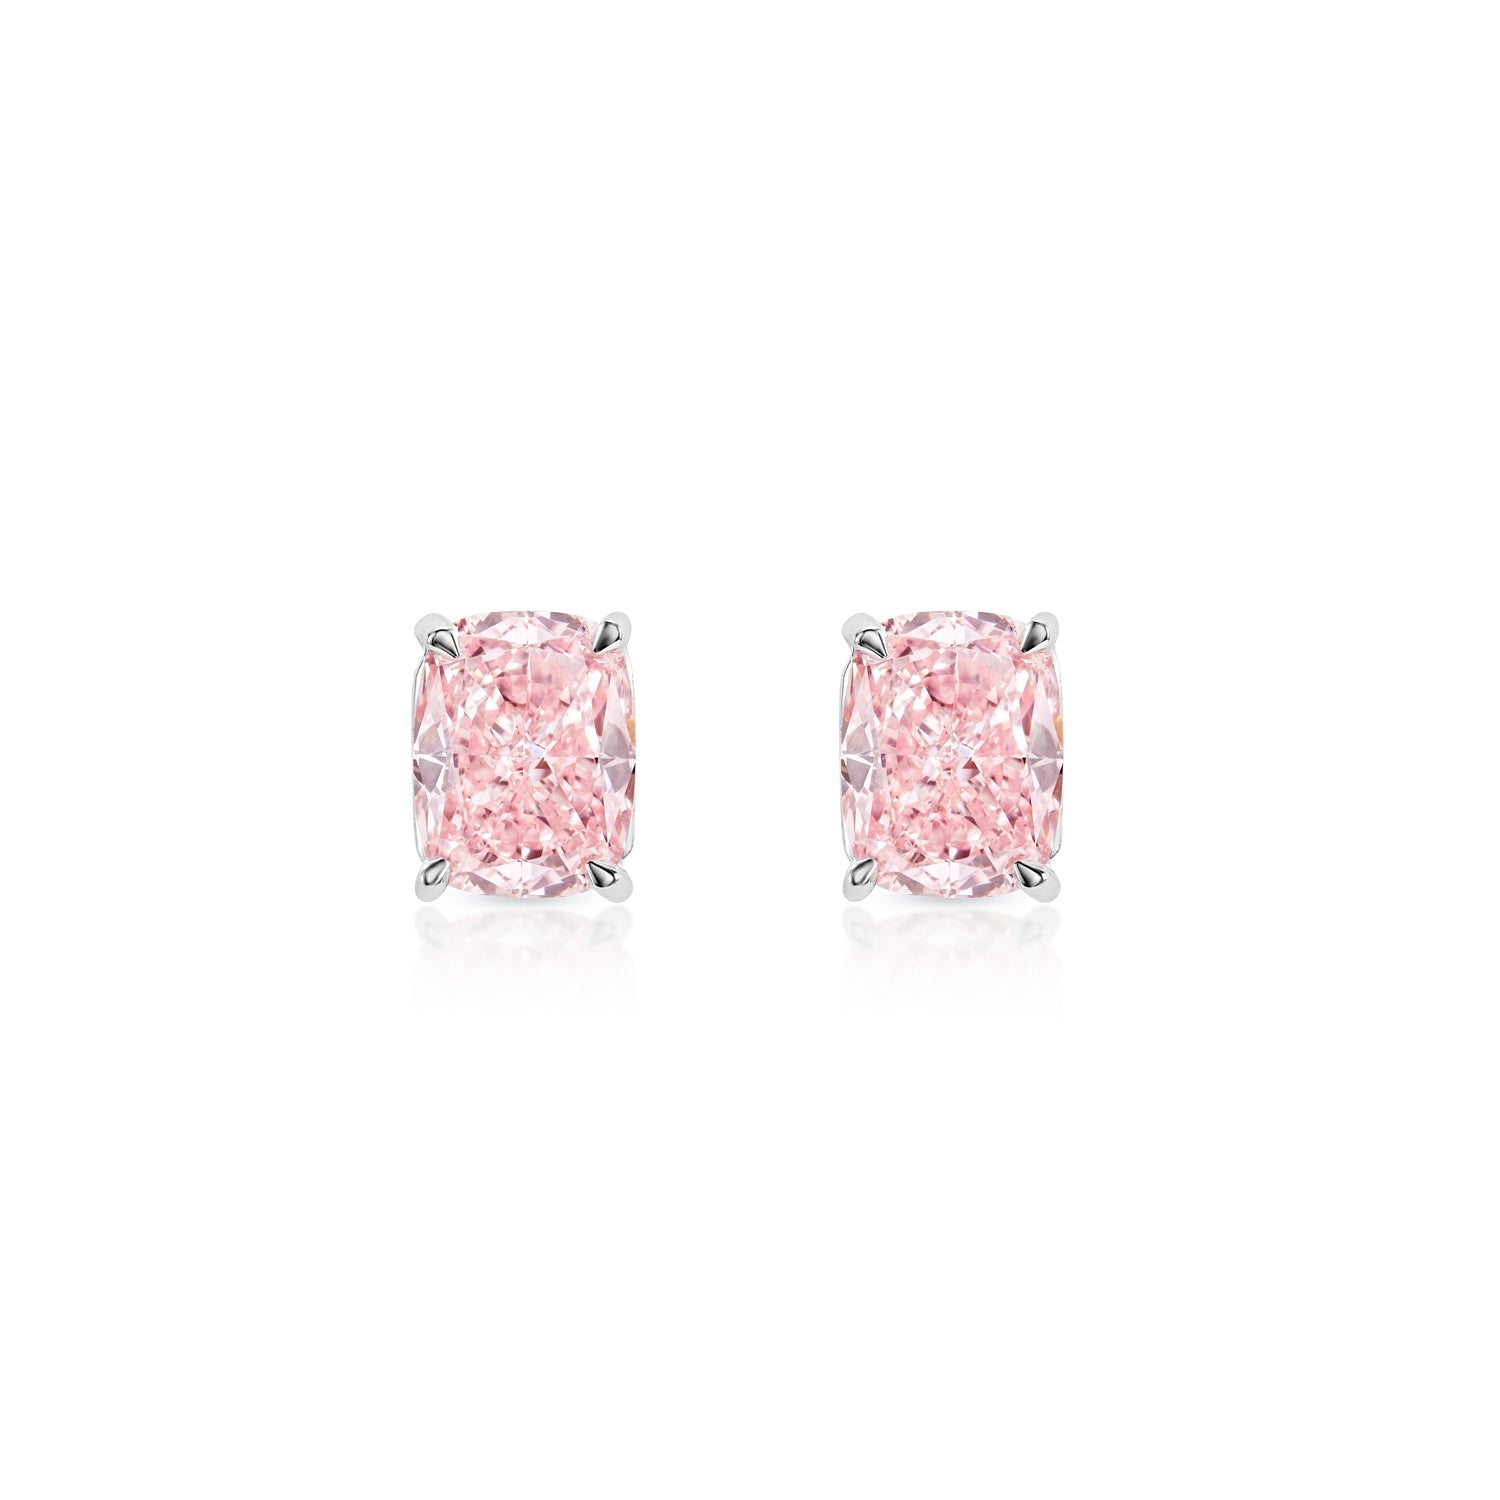 Haisley 5 Carat VVS1 Fancy Vivi Pink Diamond Stud Earrings in 14k White Gold Front View